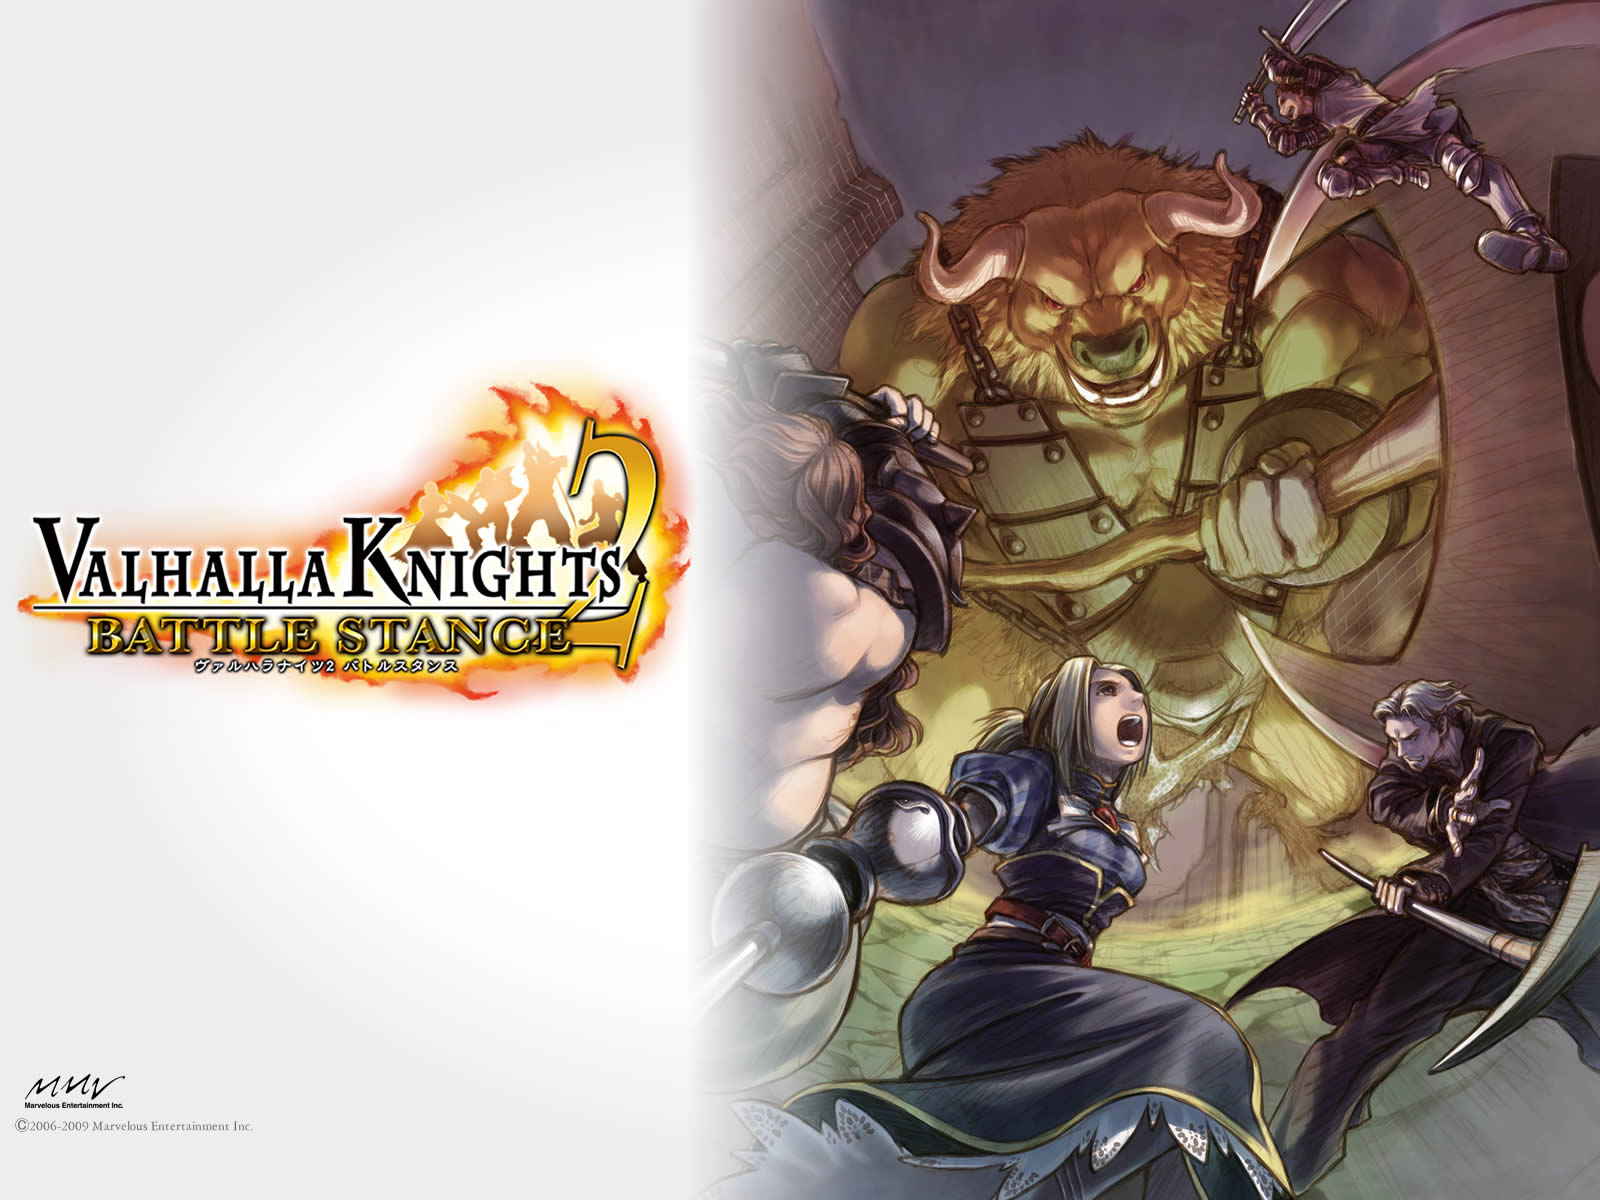 Стенд кнайт версия. Valhalla Knights 2: Battle stance. Valhalla Knights 2 Battle stance PSP. Valhalla Knights 2 PSP. Kyabosean2 рыцарь и орк.